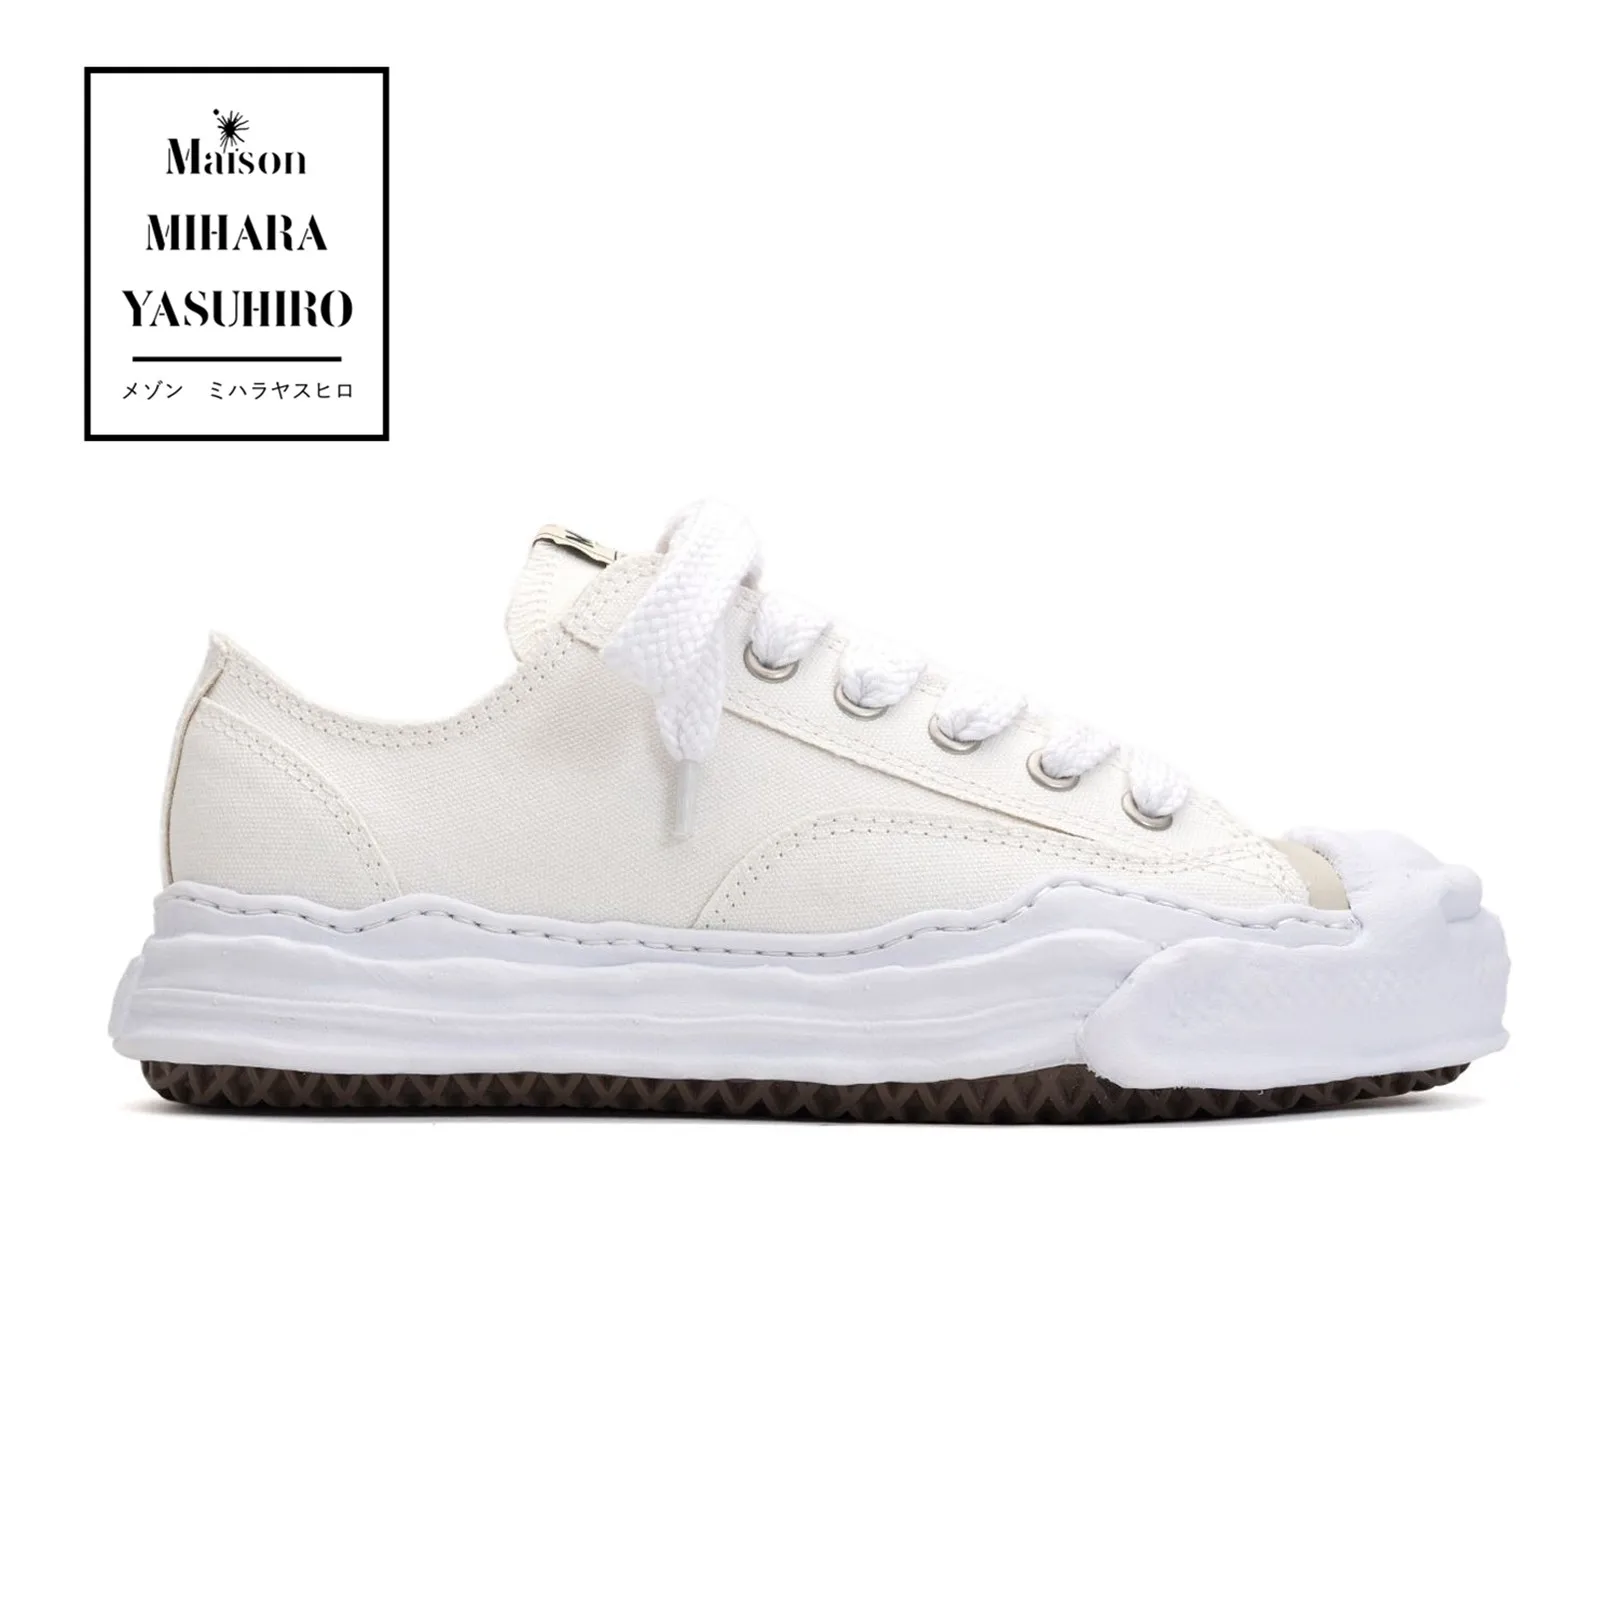 

MMY Maison MIHARA YASUHIRO HANK VL OG Sole Canvas Low Sneaker White Men's & Women's Shoes